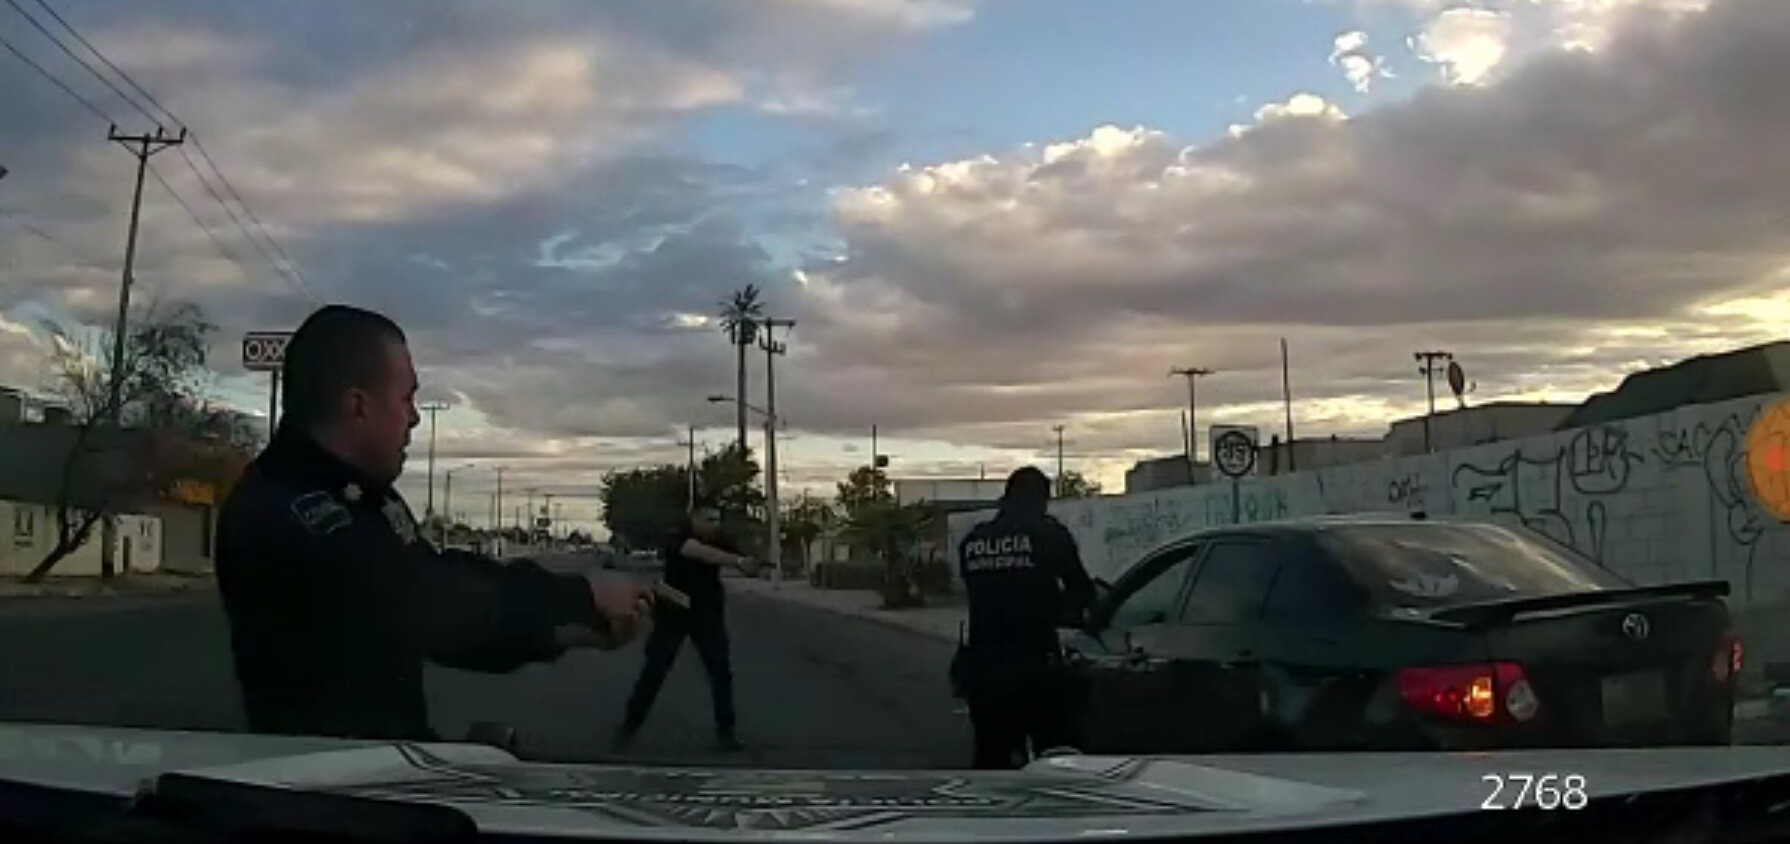 Video revela abuso de policías municipales contra sospechoso